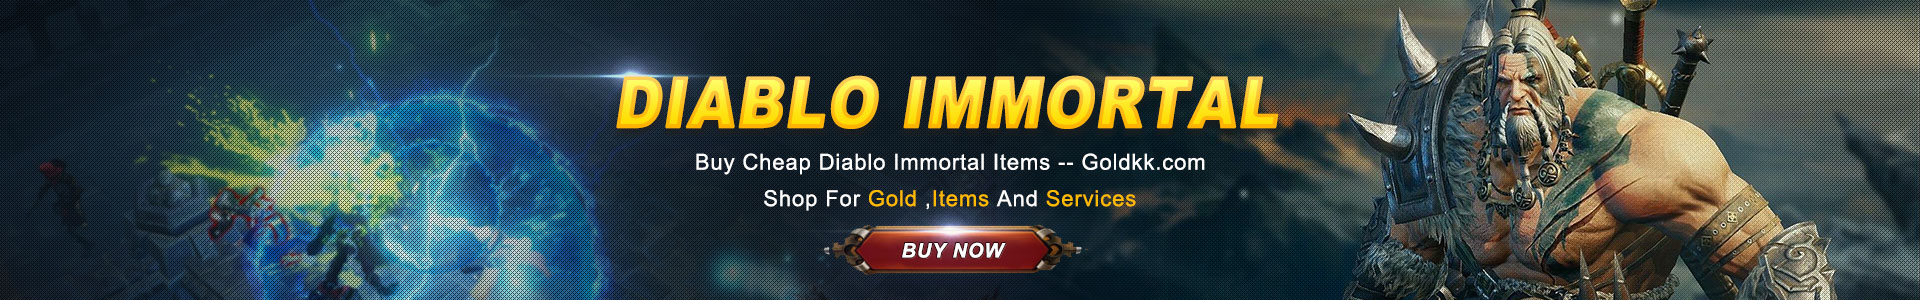 Diablo Immortal Gold